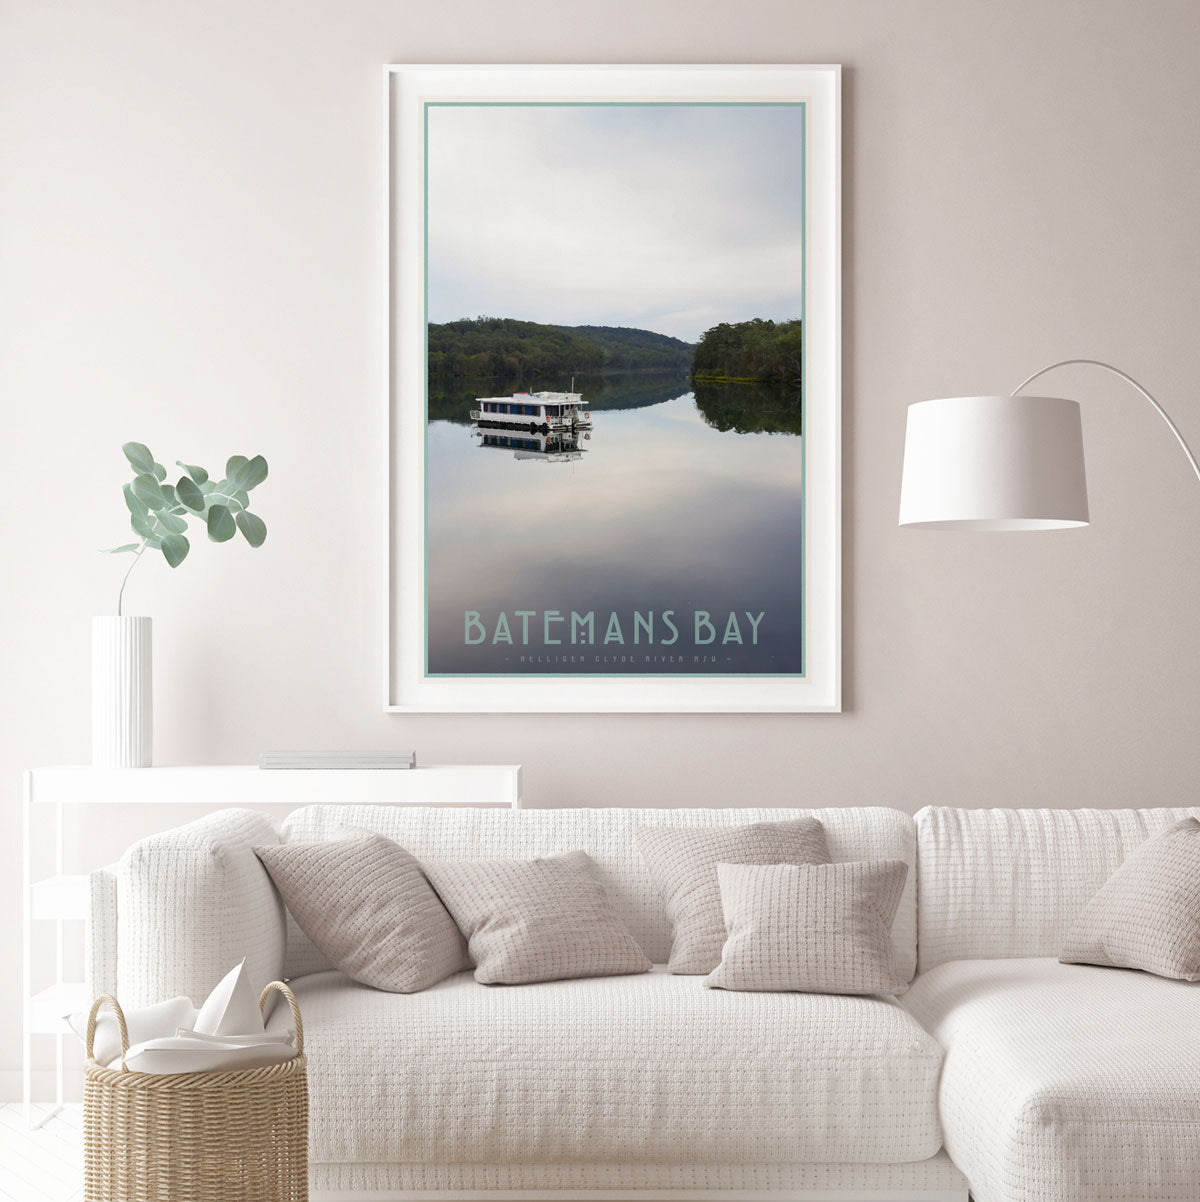 Batemans bay NSW vintage travel framed print by places we luv